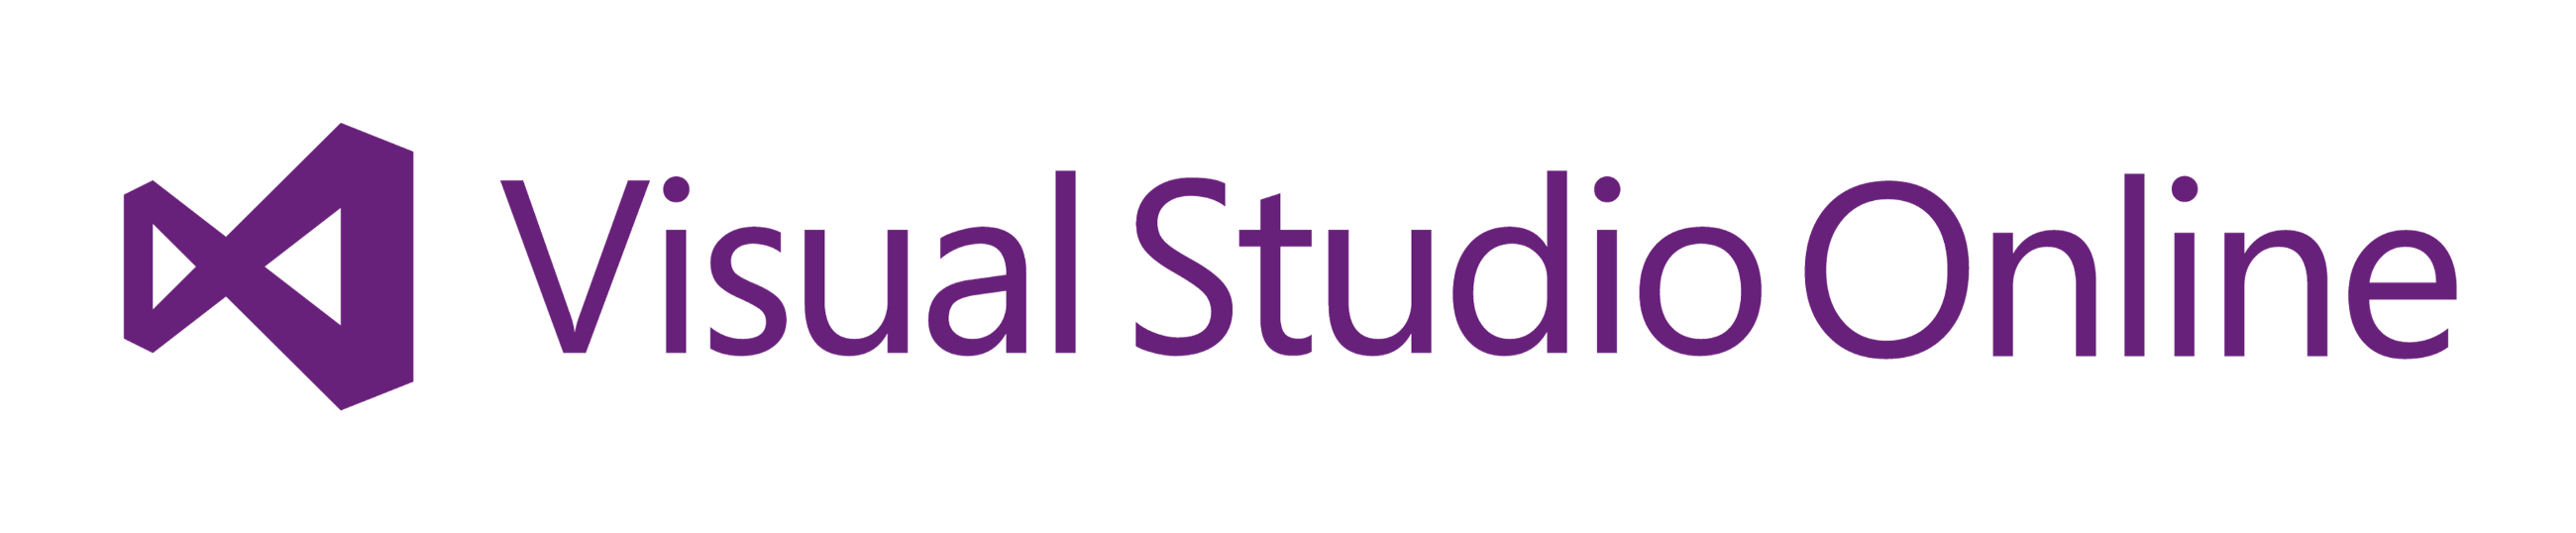 Visual Studio Online Logo - Announcing Visual Studio Online